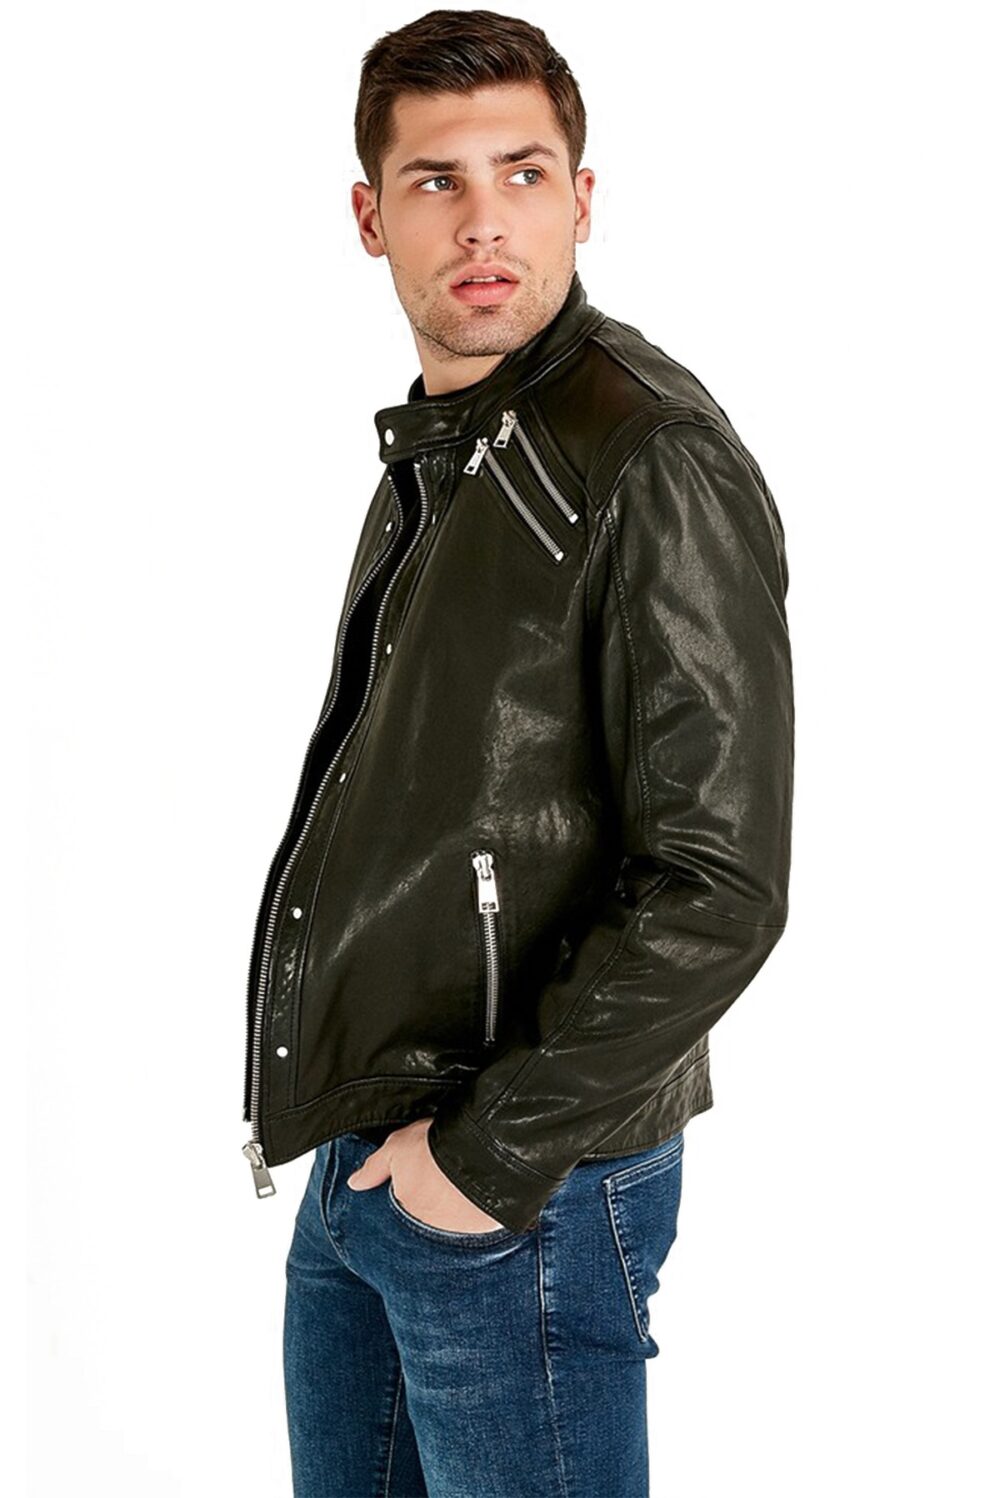 Grant Galore Olive Leather Jacket - 100% Lambskin Leather